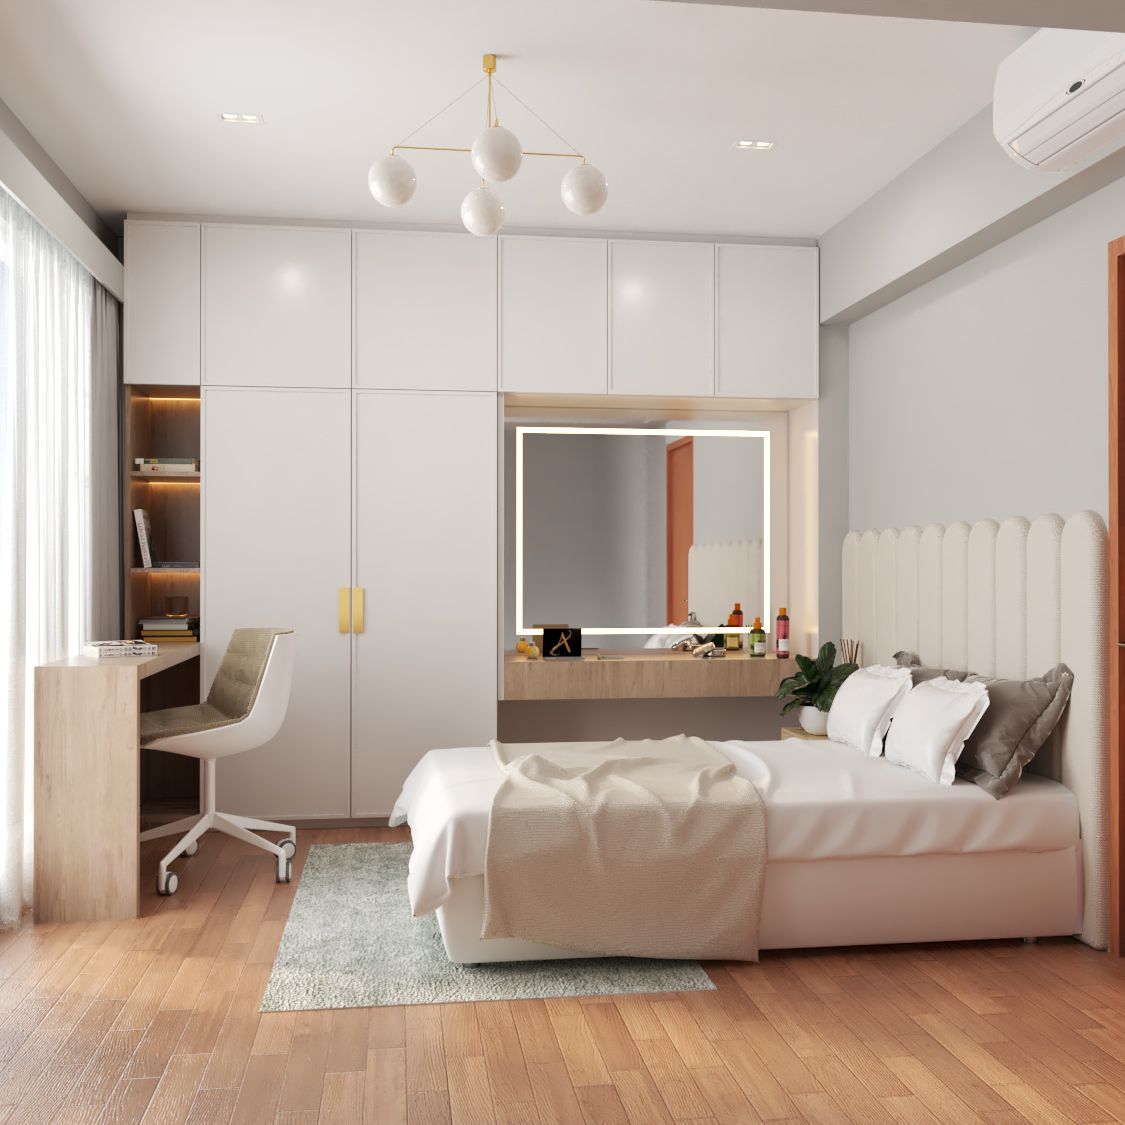 bedroom design | hdb bedroom design ideas in singapore - livspace